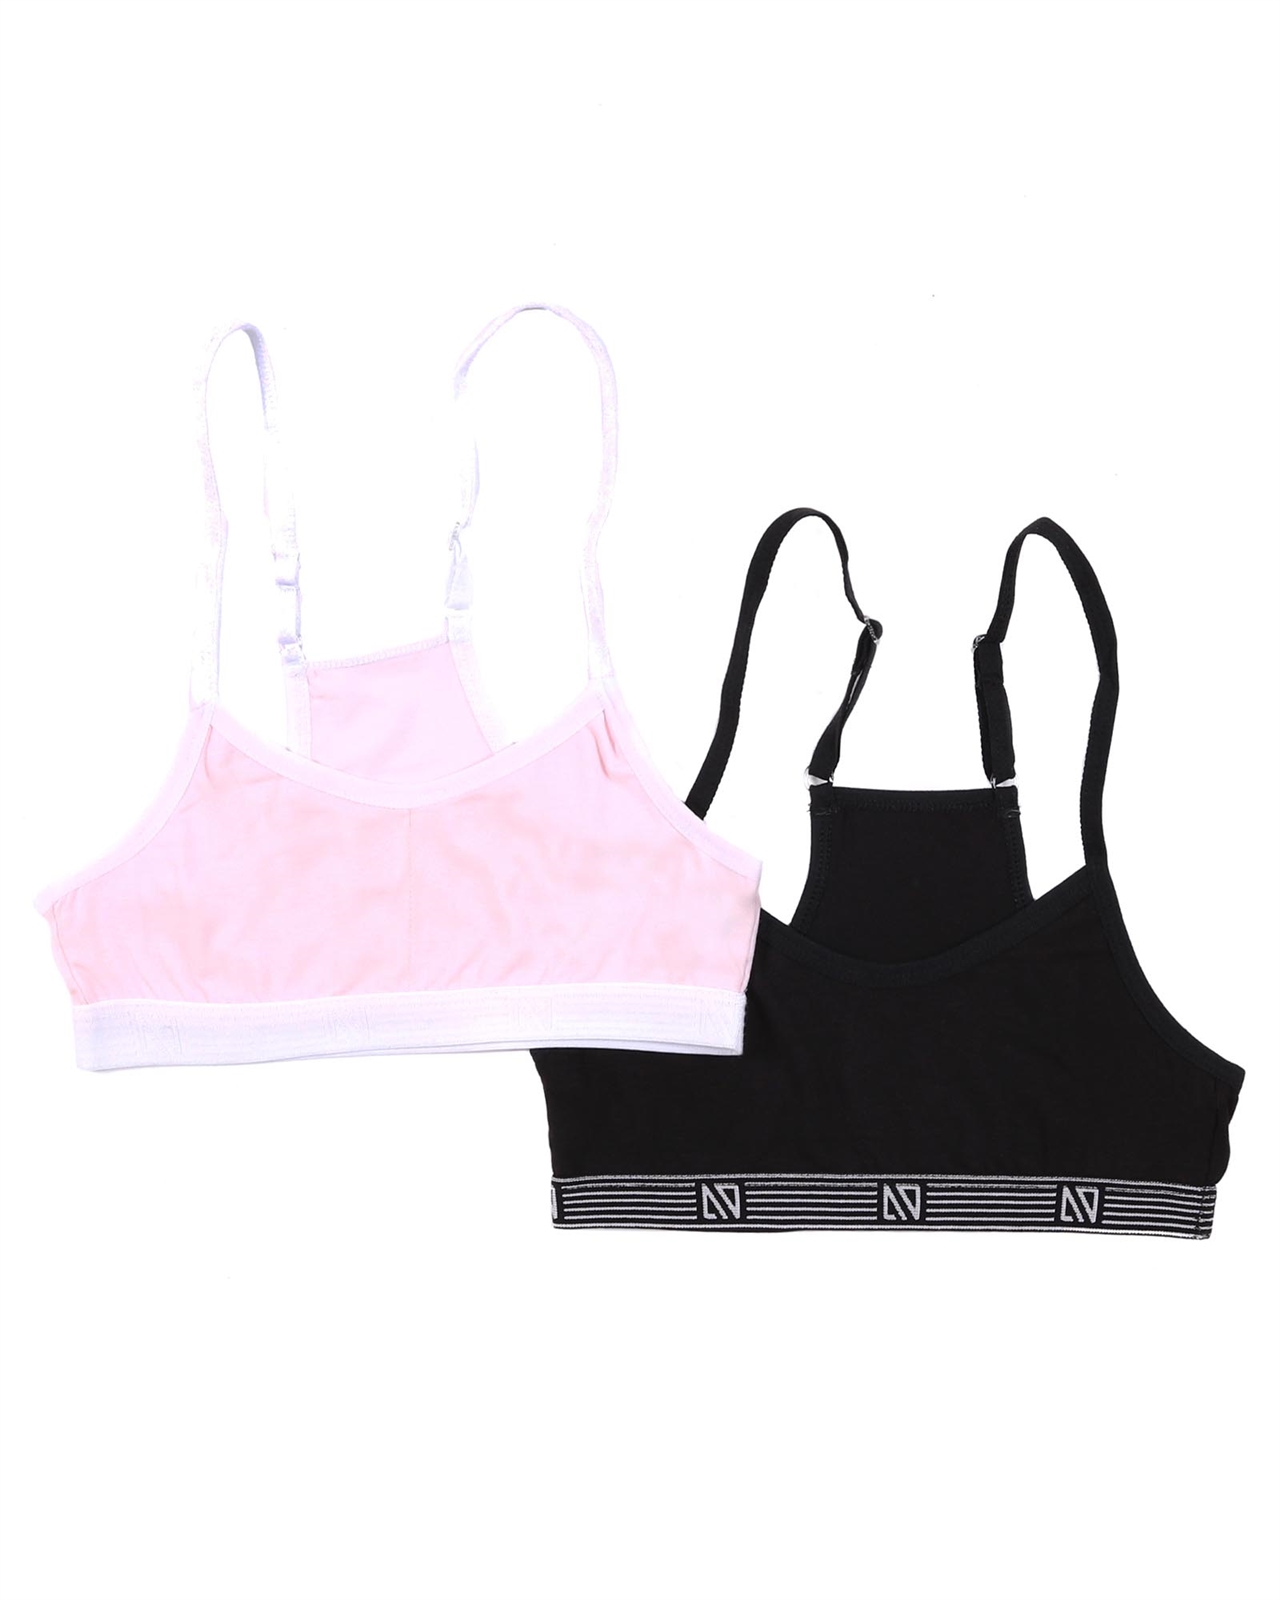 NANO Girls' Two-pack Bralette in Pink/Black, Sizes 6-14